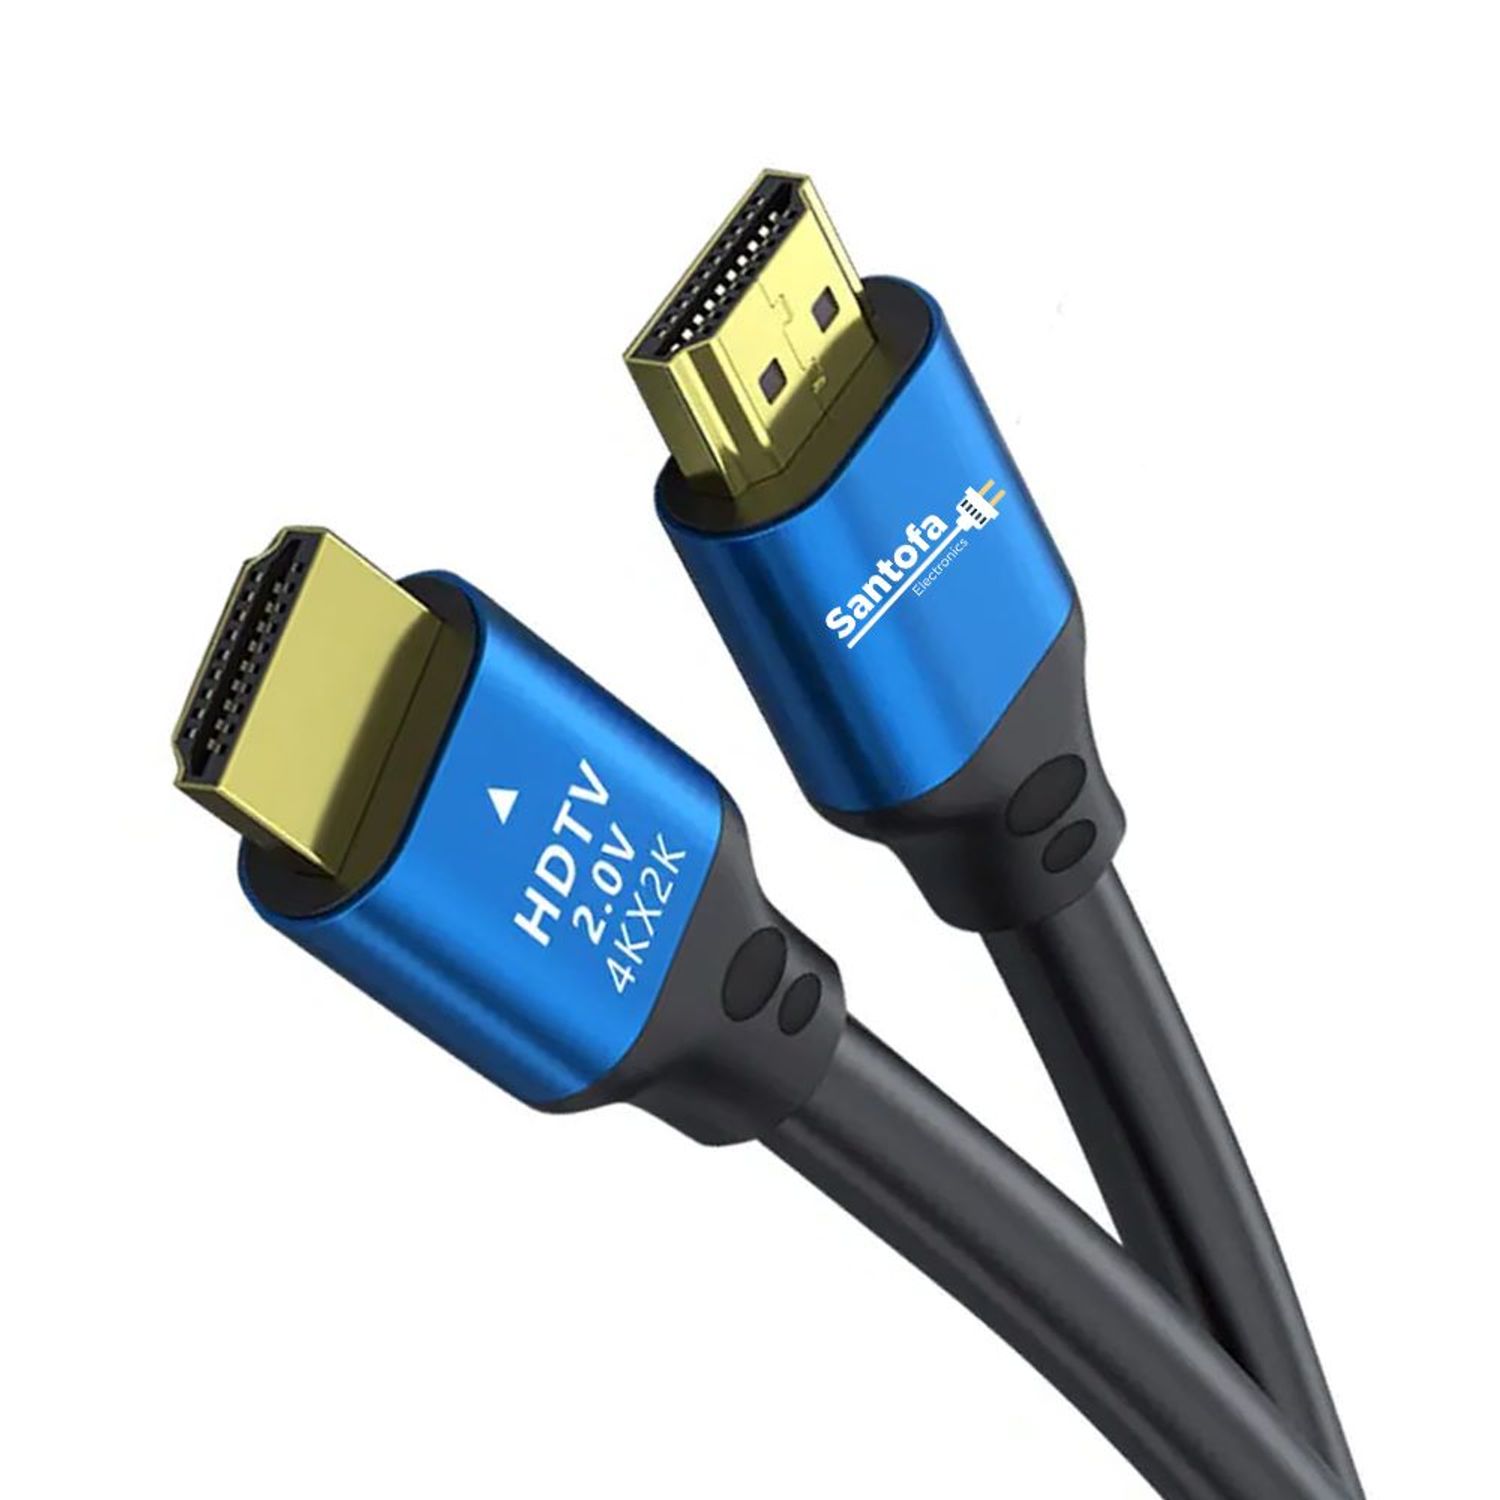 Cable Hdmi 5 Metros Full HD, UHD 3d Envio Gratis – Dlectro